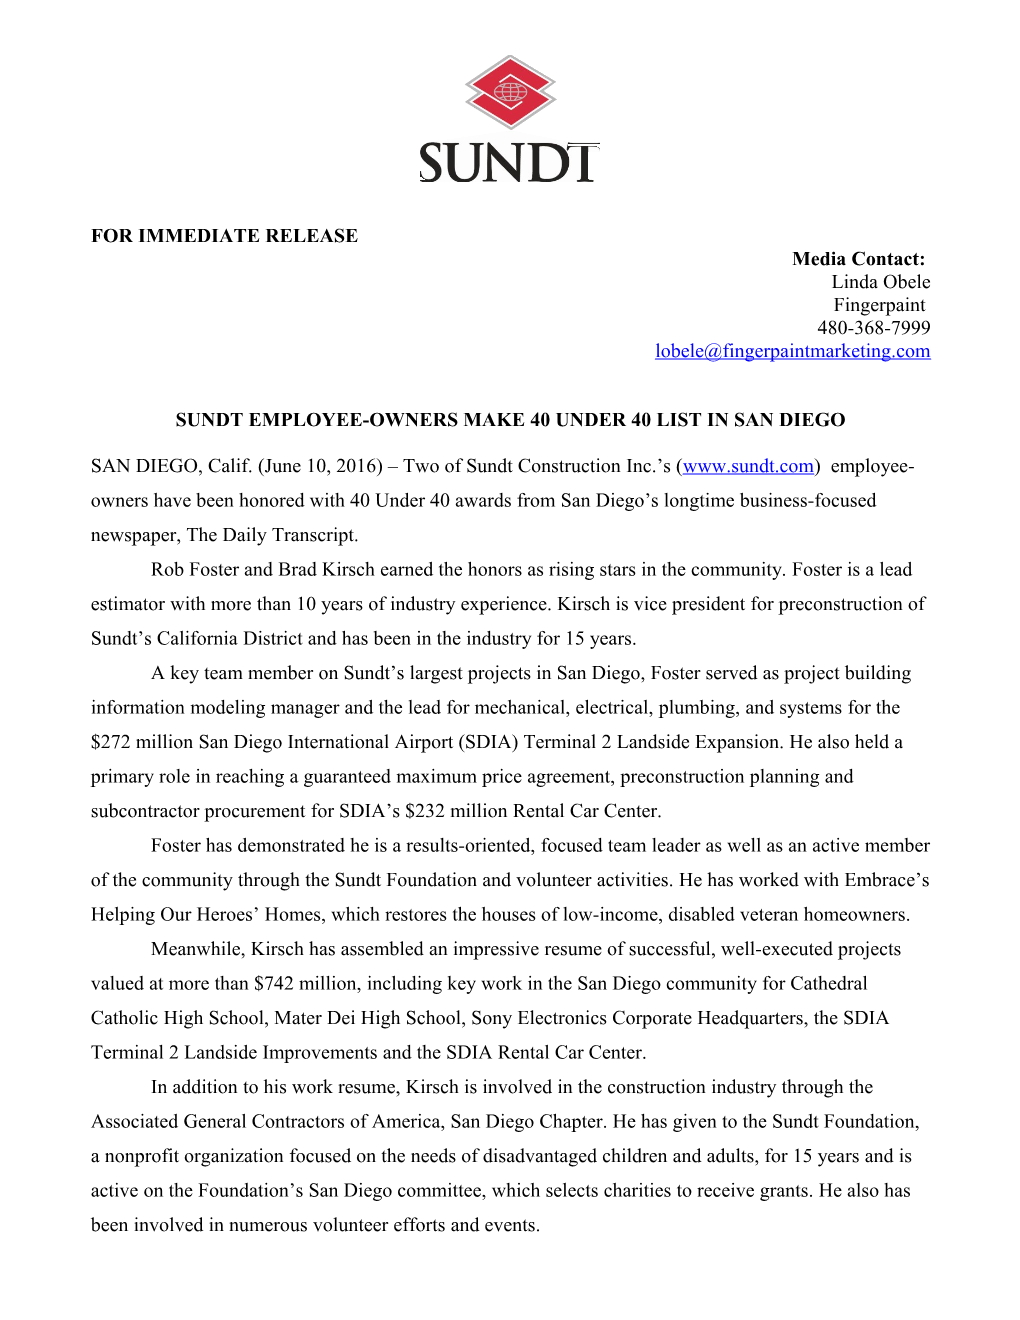 Sundt Employee-Owners Make 40 Under 40 List in San Diego